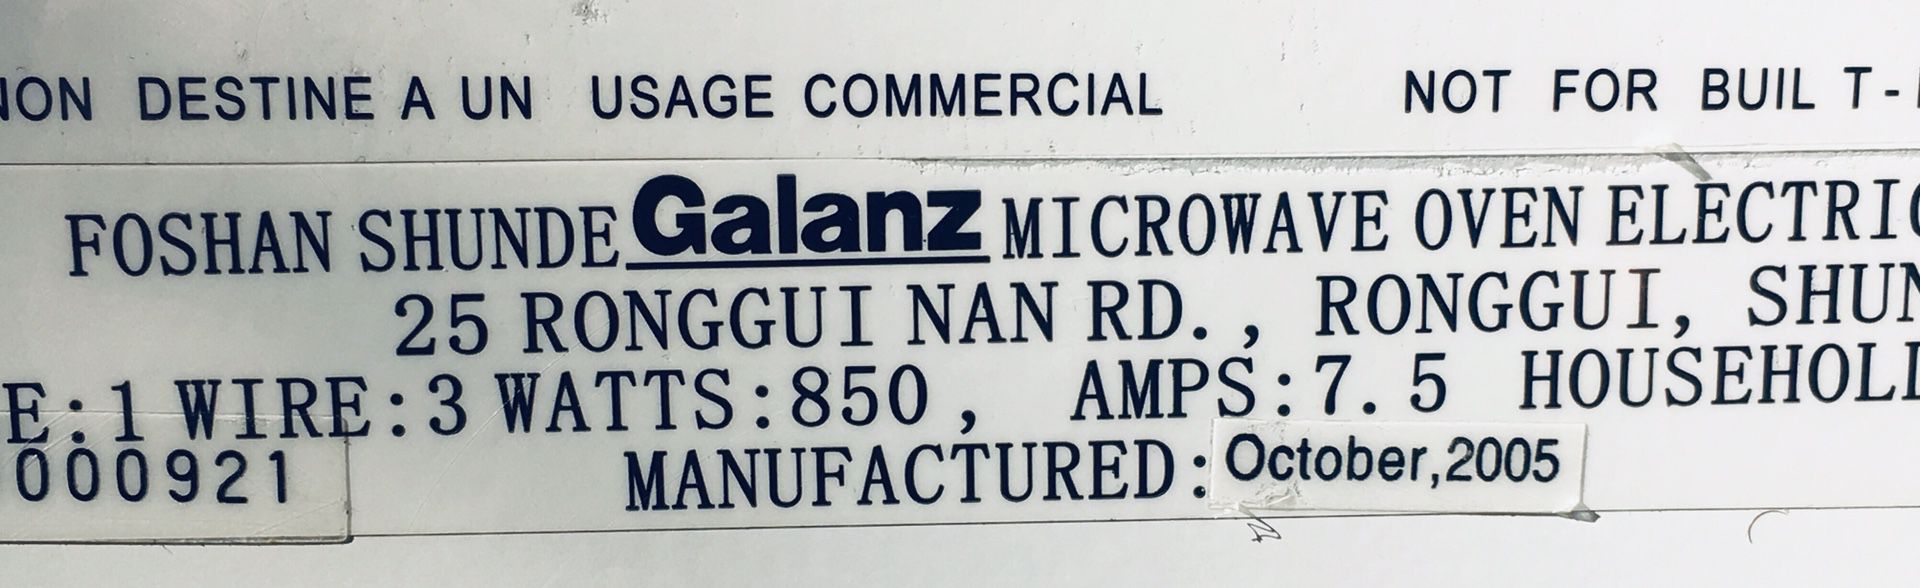 Galantz 850 Watt Microwave